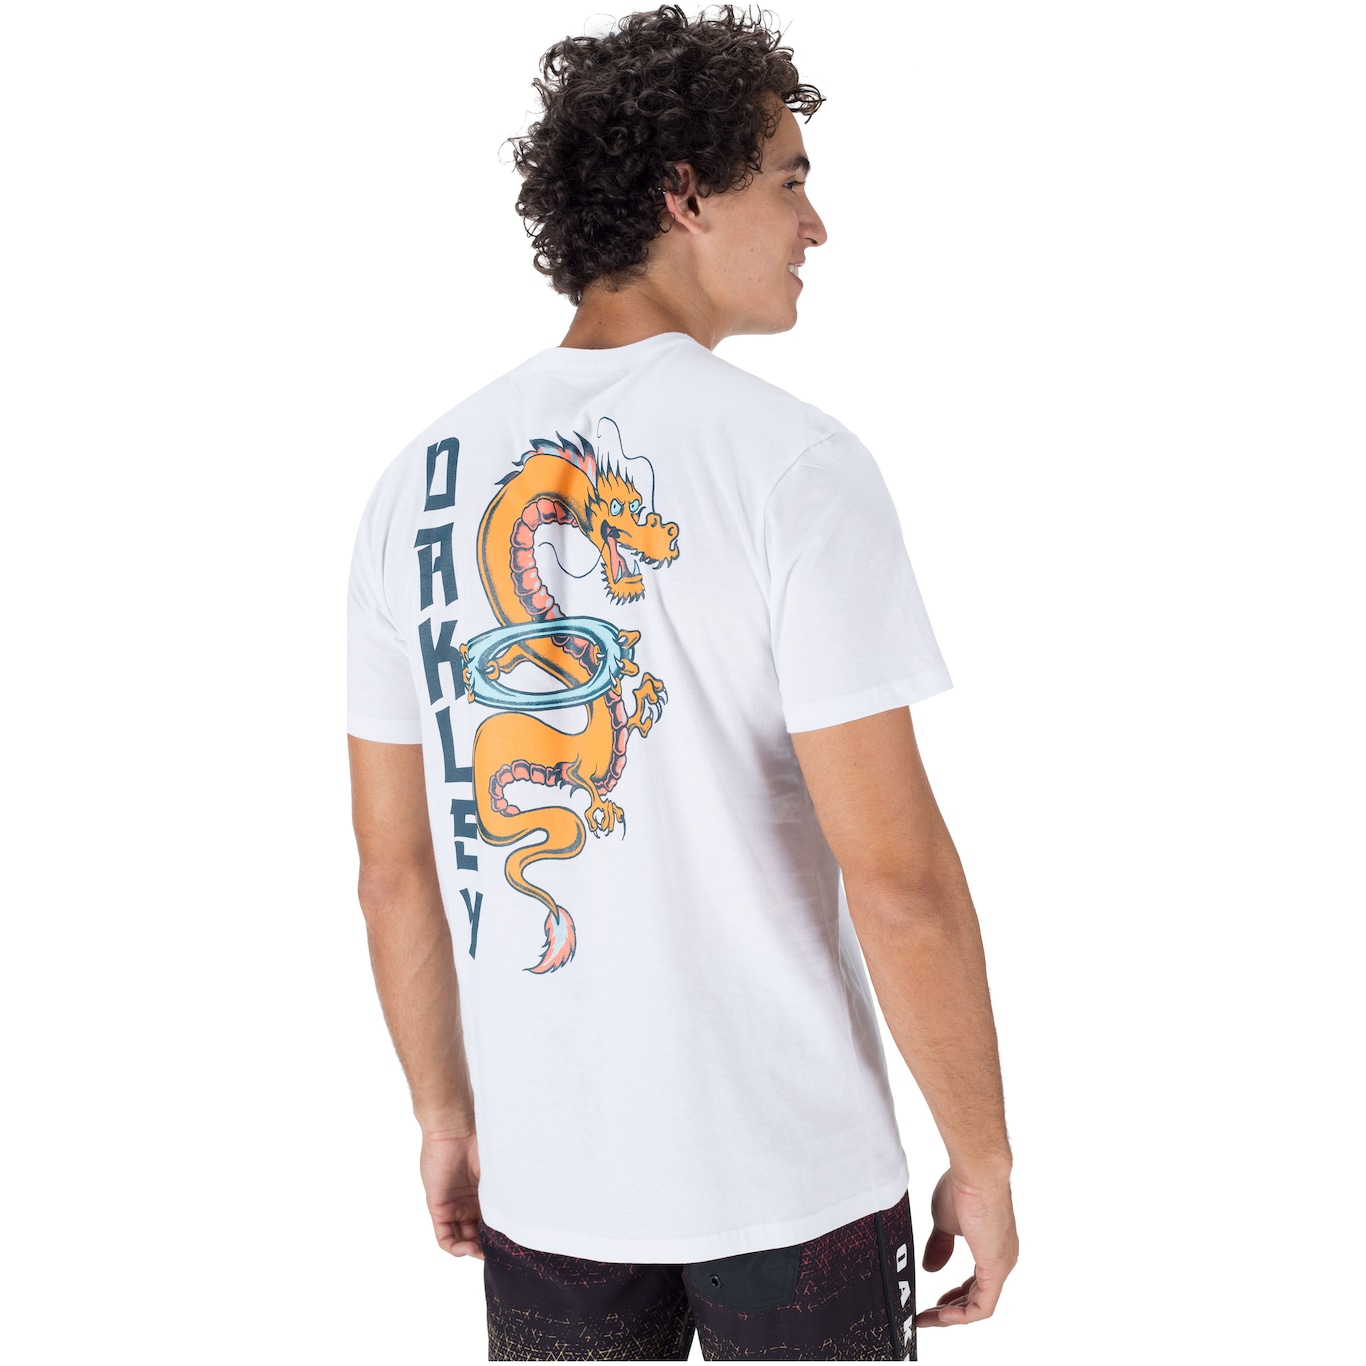 Camiseta Oakley The Dragon Tatto | Camiseta Masculina Oakley Nunca Usado  89083890 | enjoei